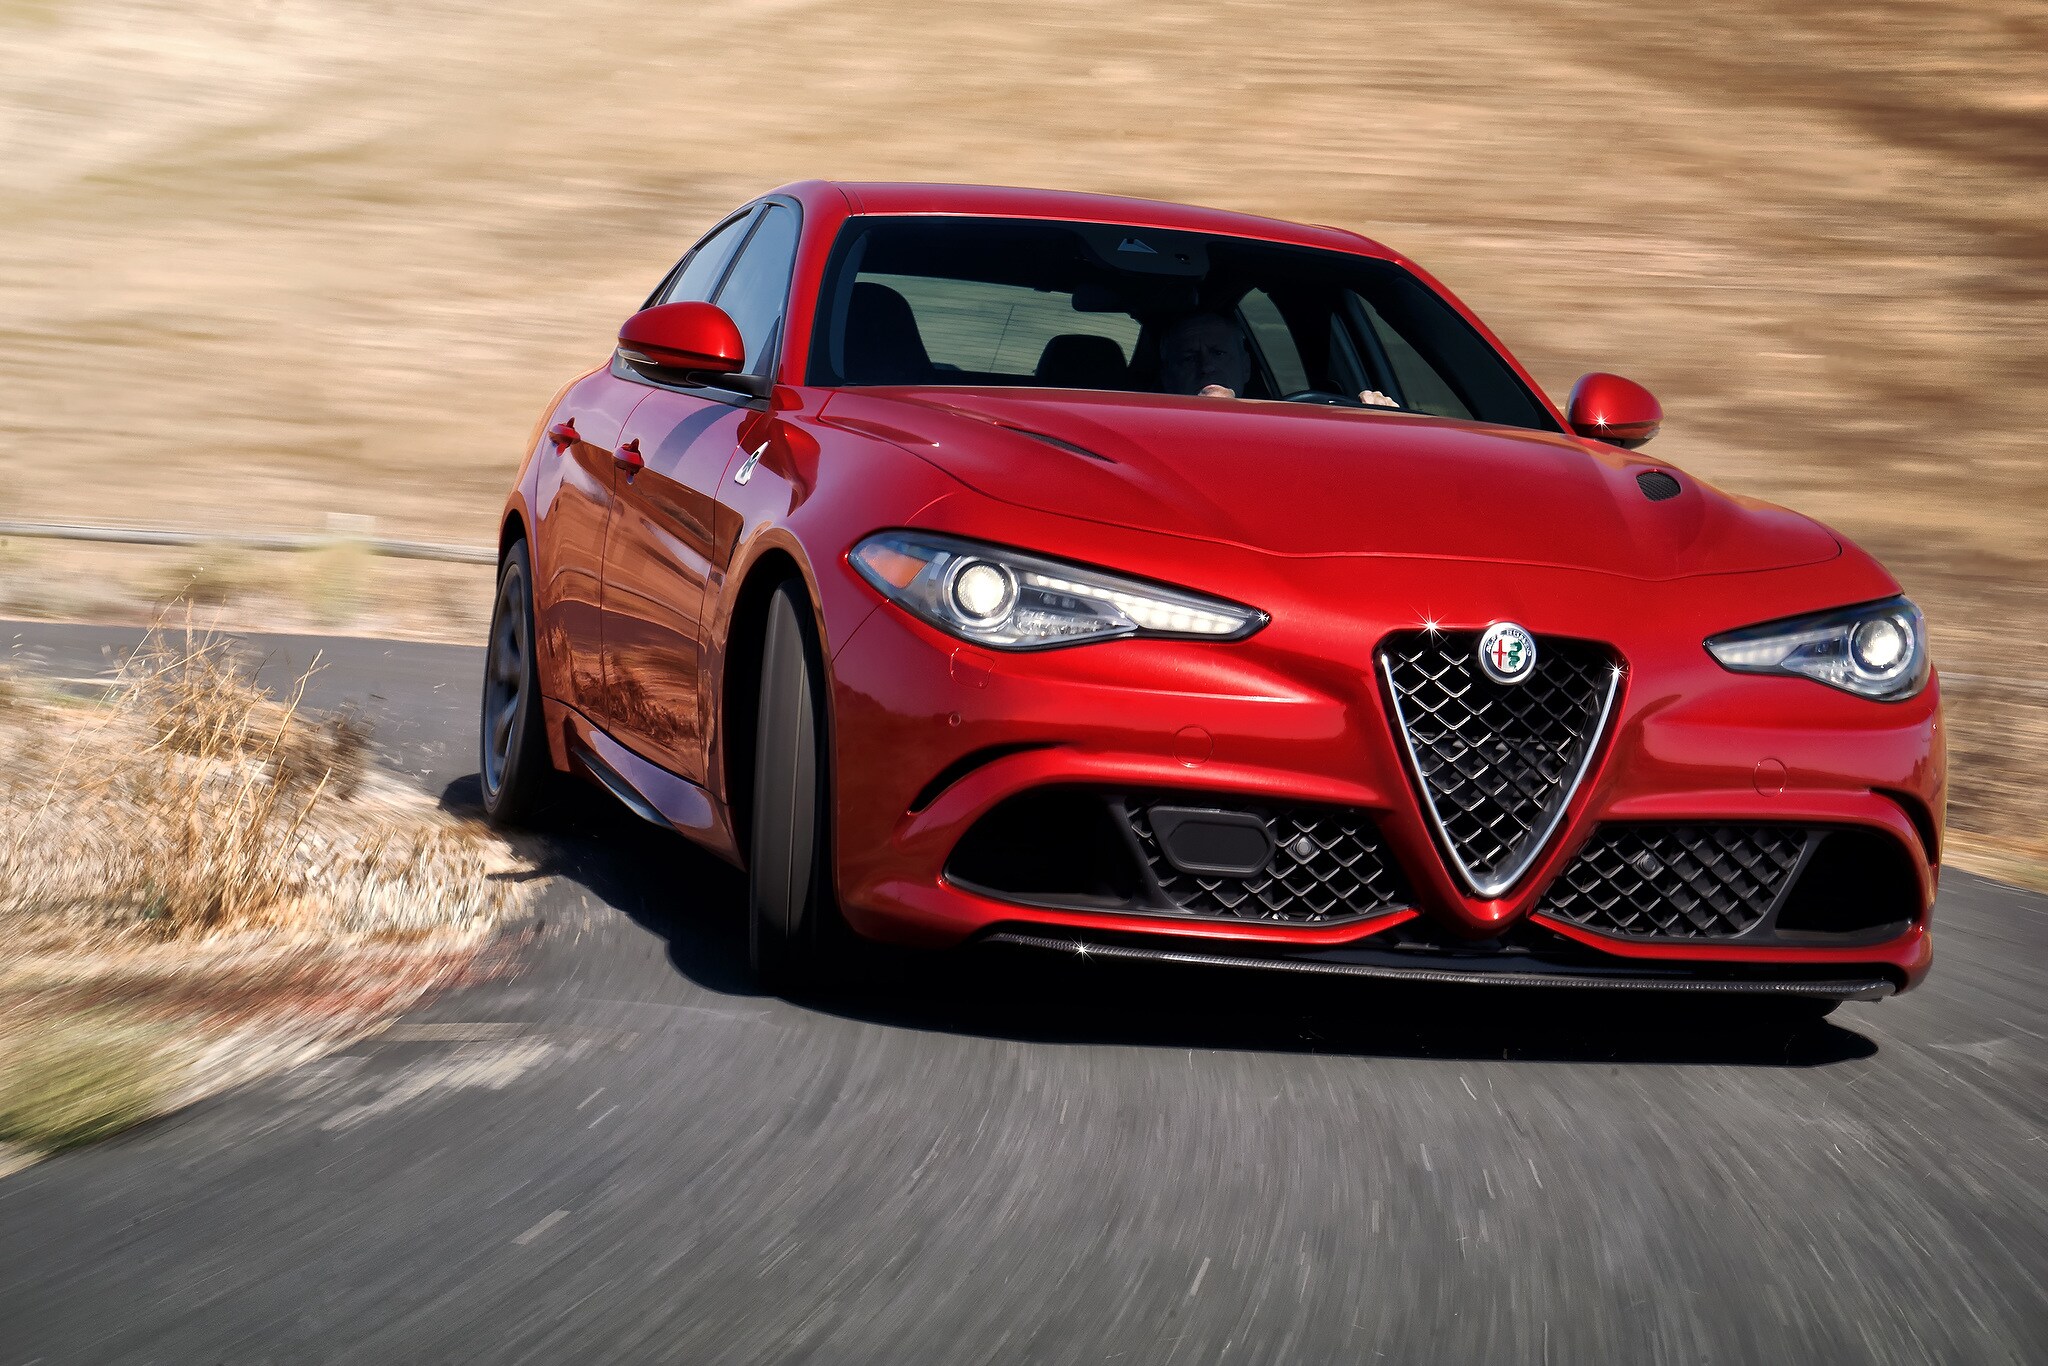 Alfa Romeo at full power